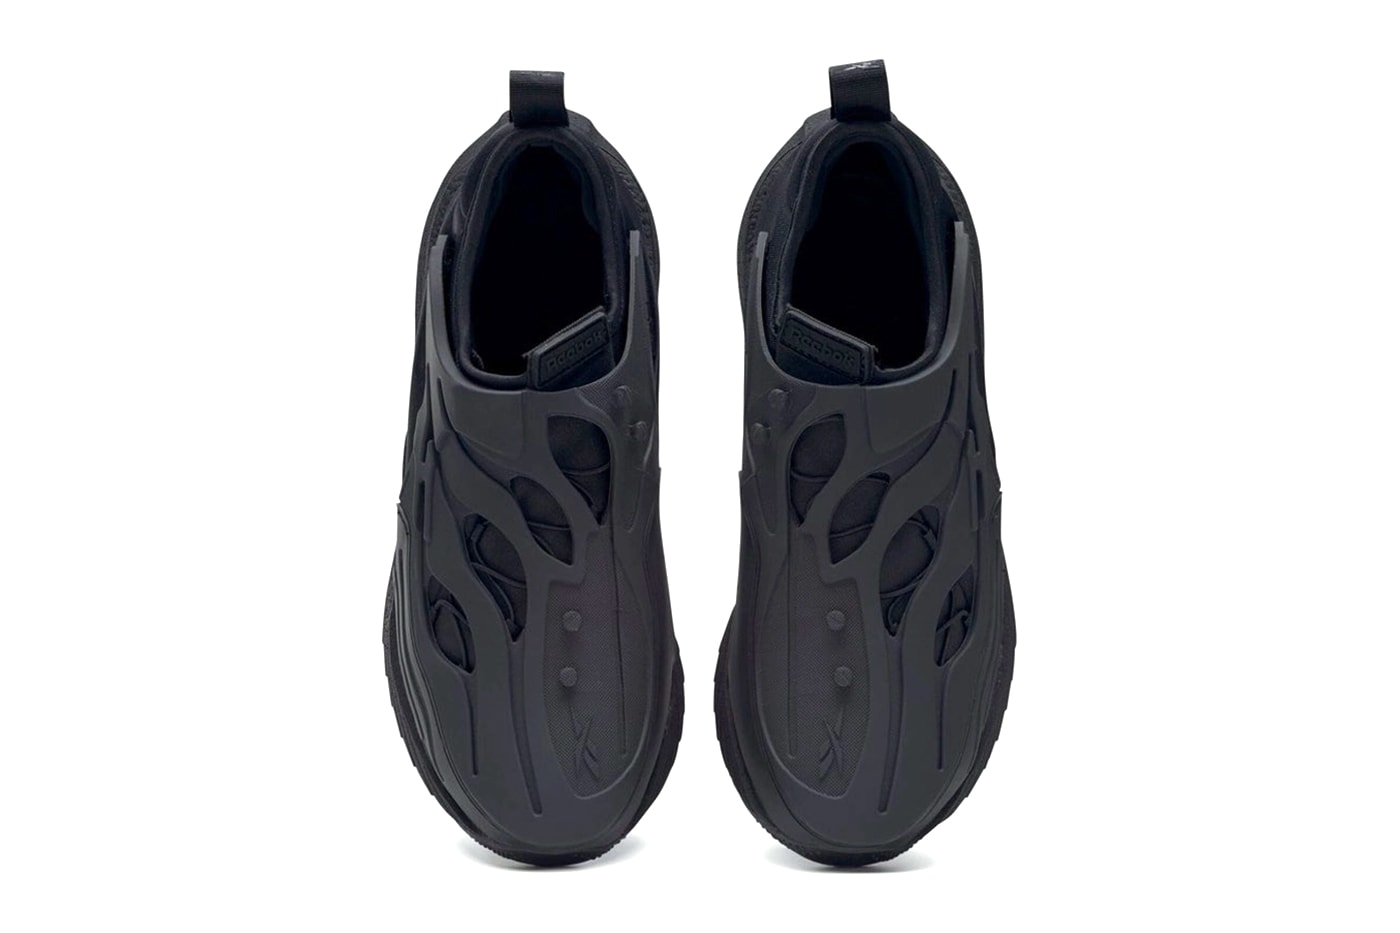 Reebok 最新鞋款 Floatride Energy Argus X 正式發佈